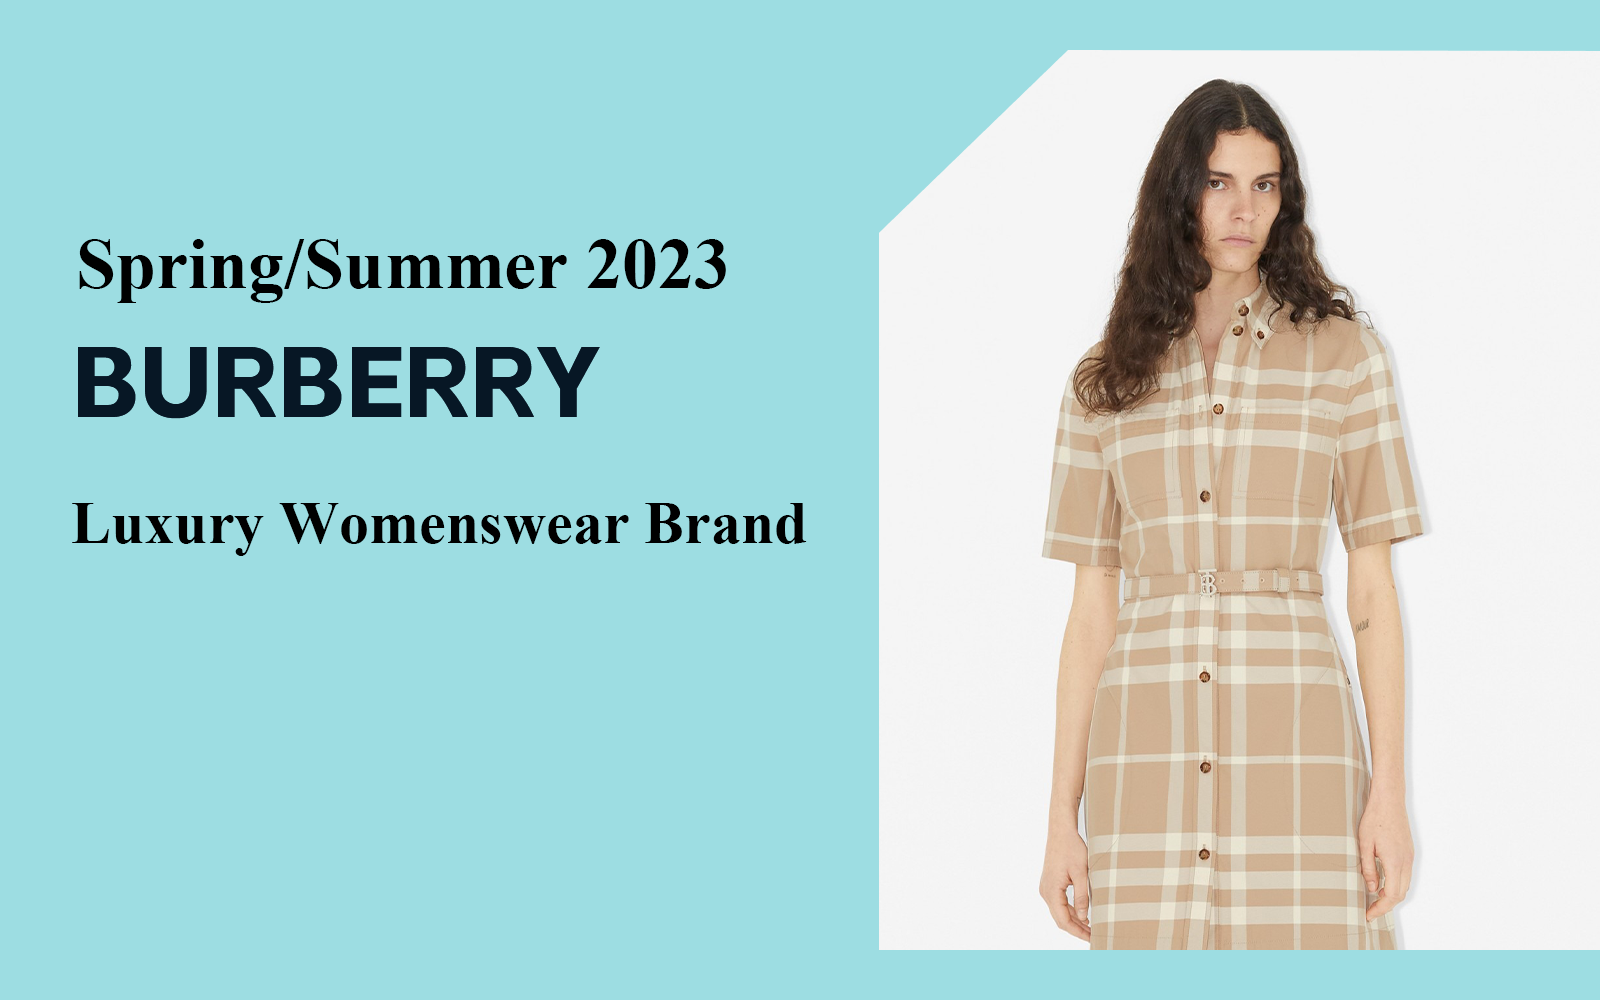 The Analysis of Burberry The Luxury Womenswear Brand